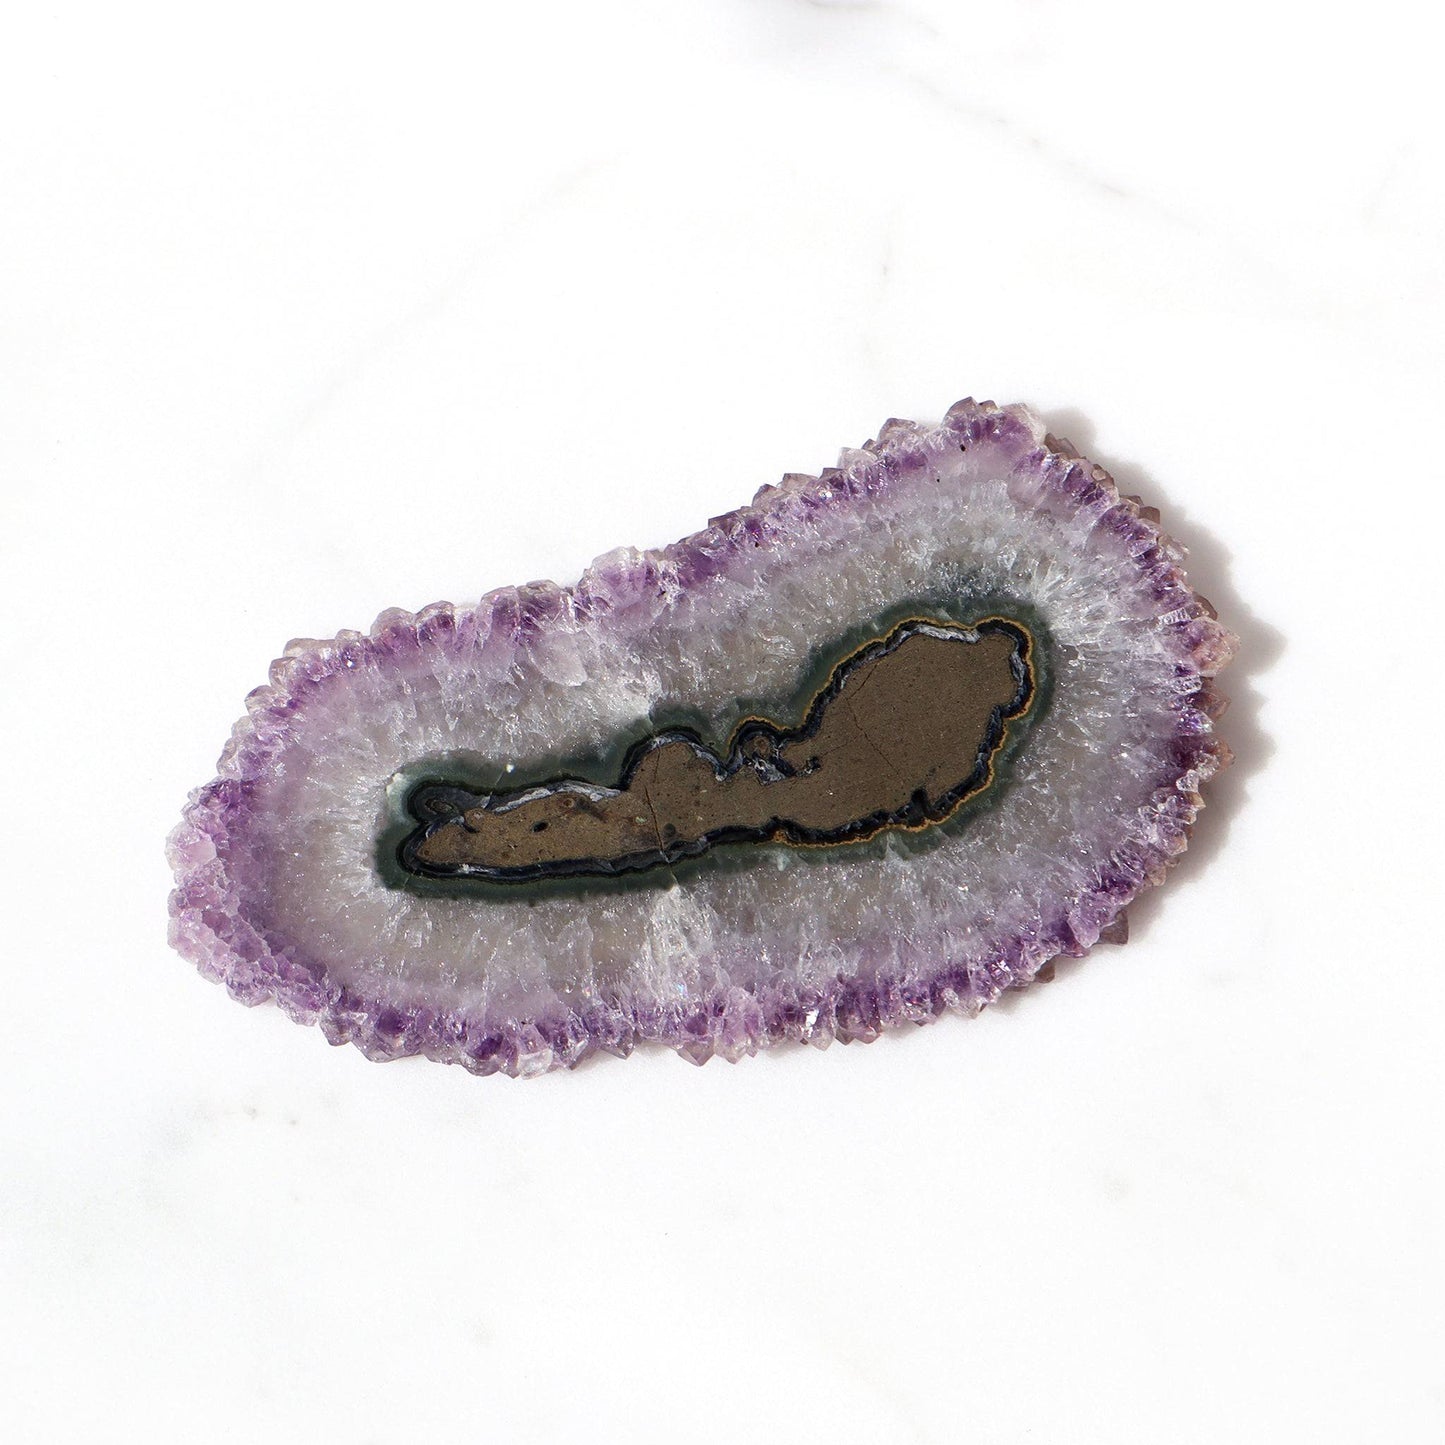 Rare Amethyst Stalactite Slice. Minerals, Crystals, Jasper, rich melange of minerals - Deepest Earth